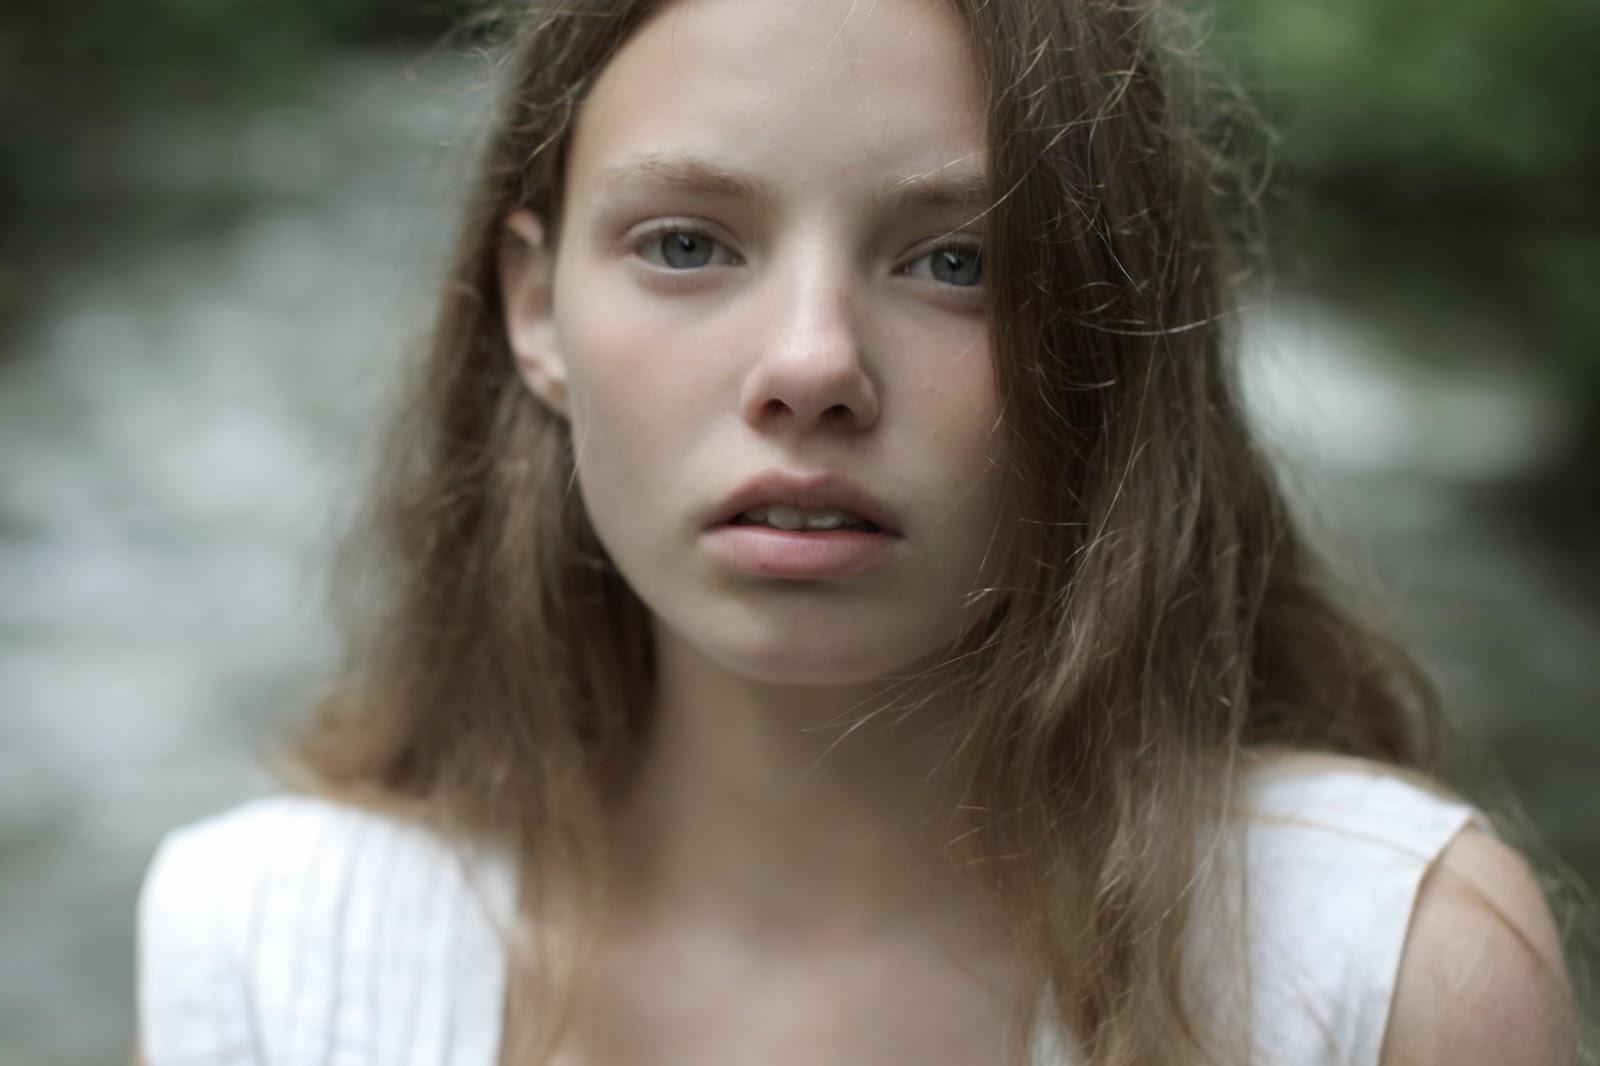 “Kristine Frøseth (Norwegian model) by Anna Rømcke Høiseth” .